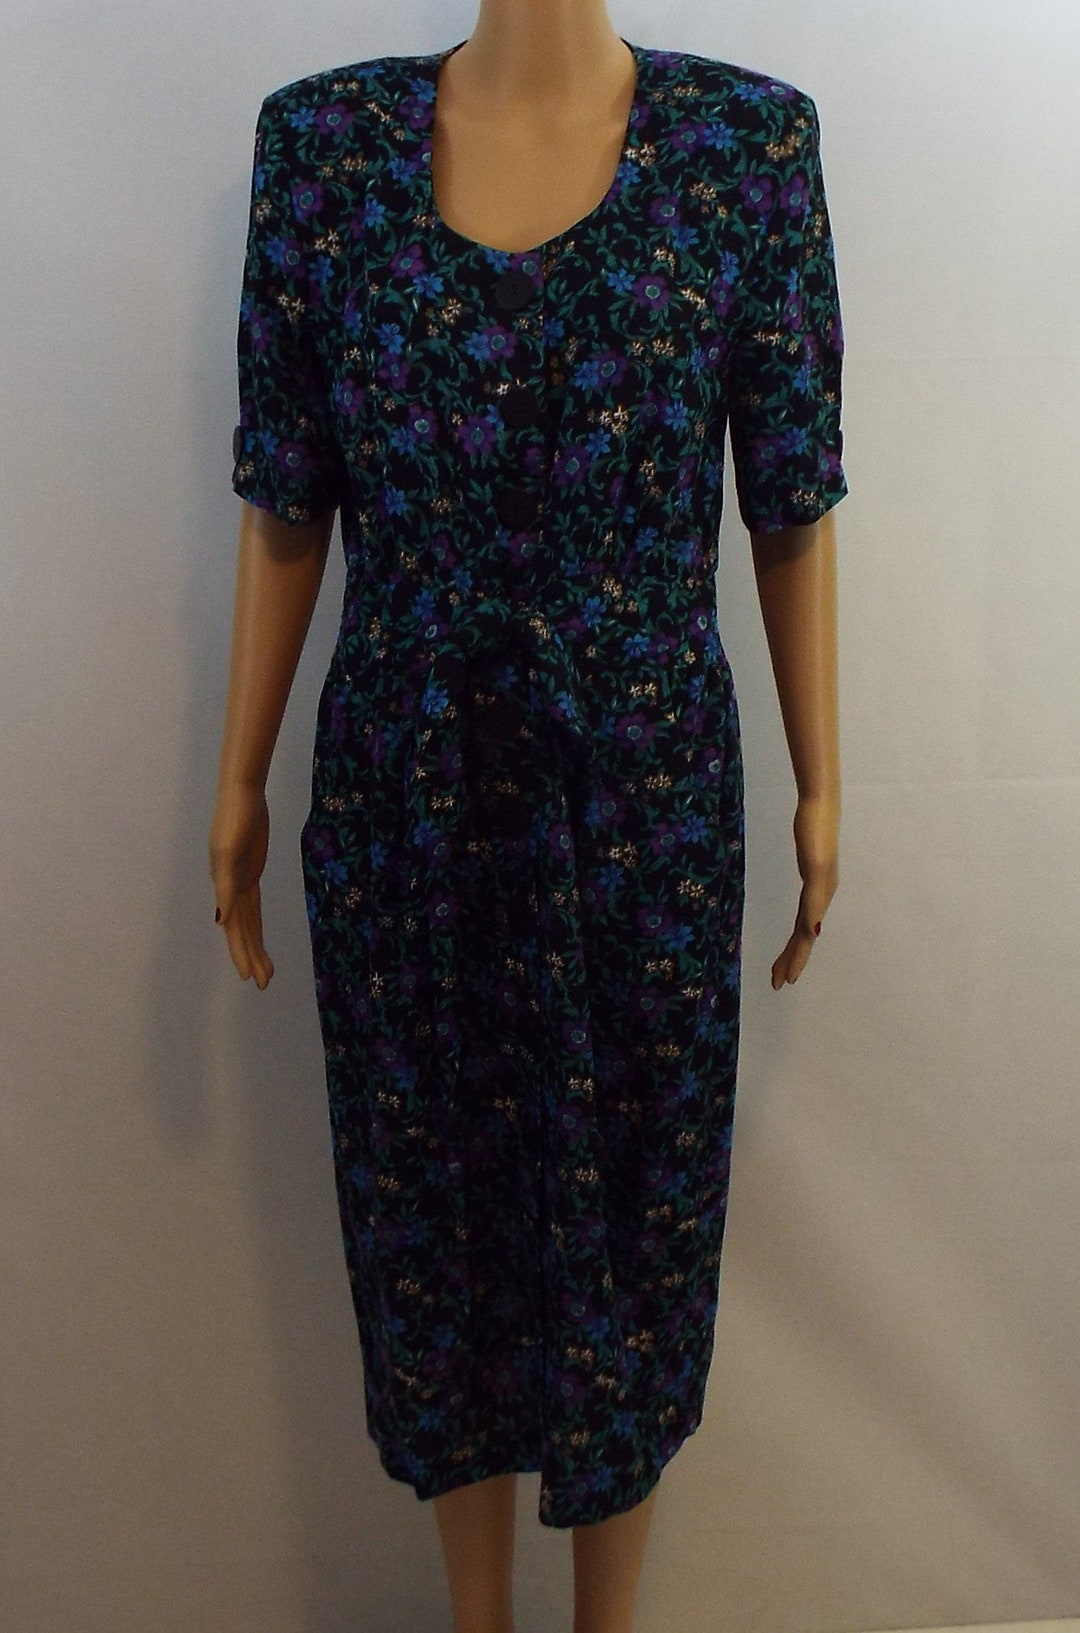 Vintage 80s 90s Black and Blue Floral Print Short Sleeve Dress - Etsy